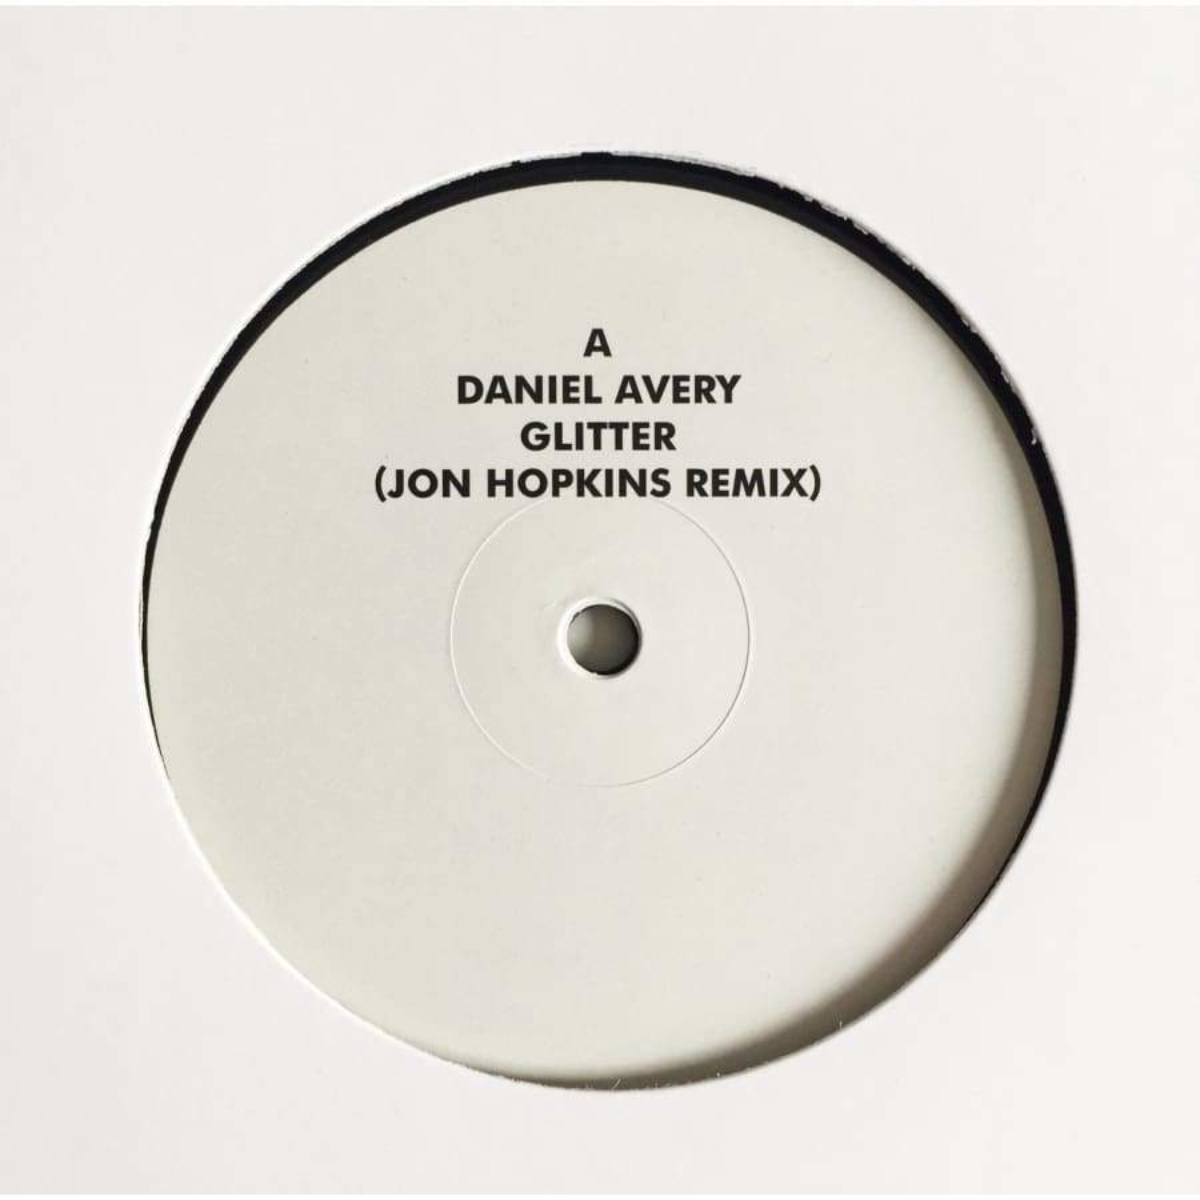 Daniel Avery and Jon Hopkins trade remixes